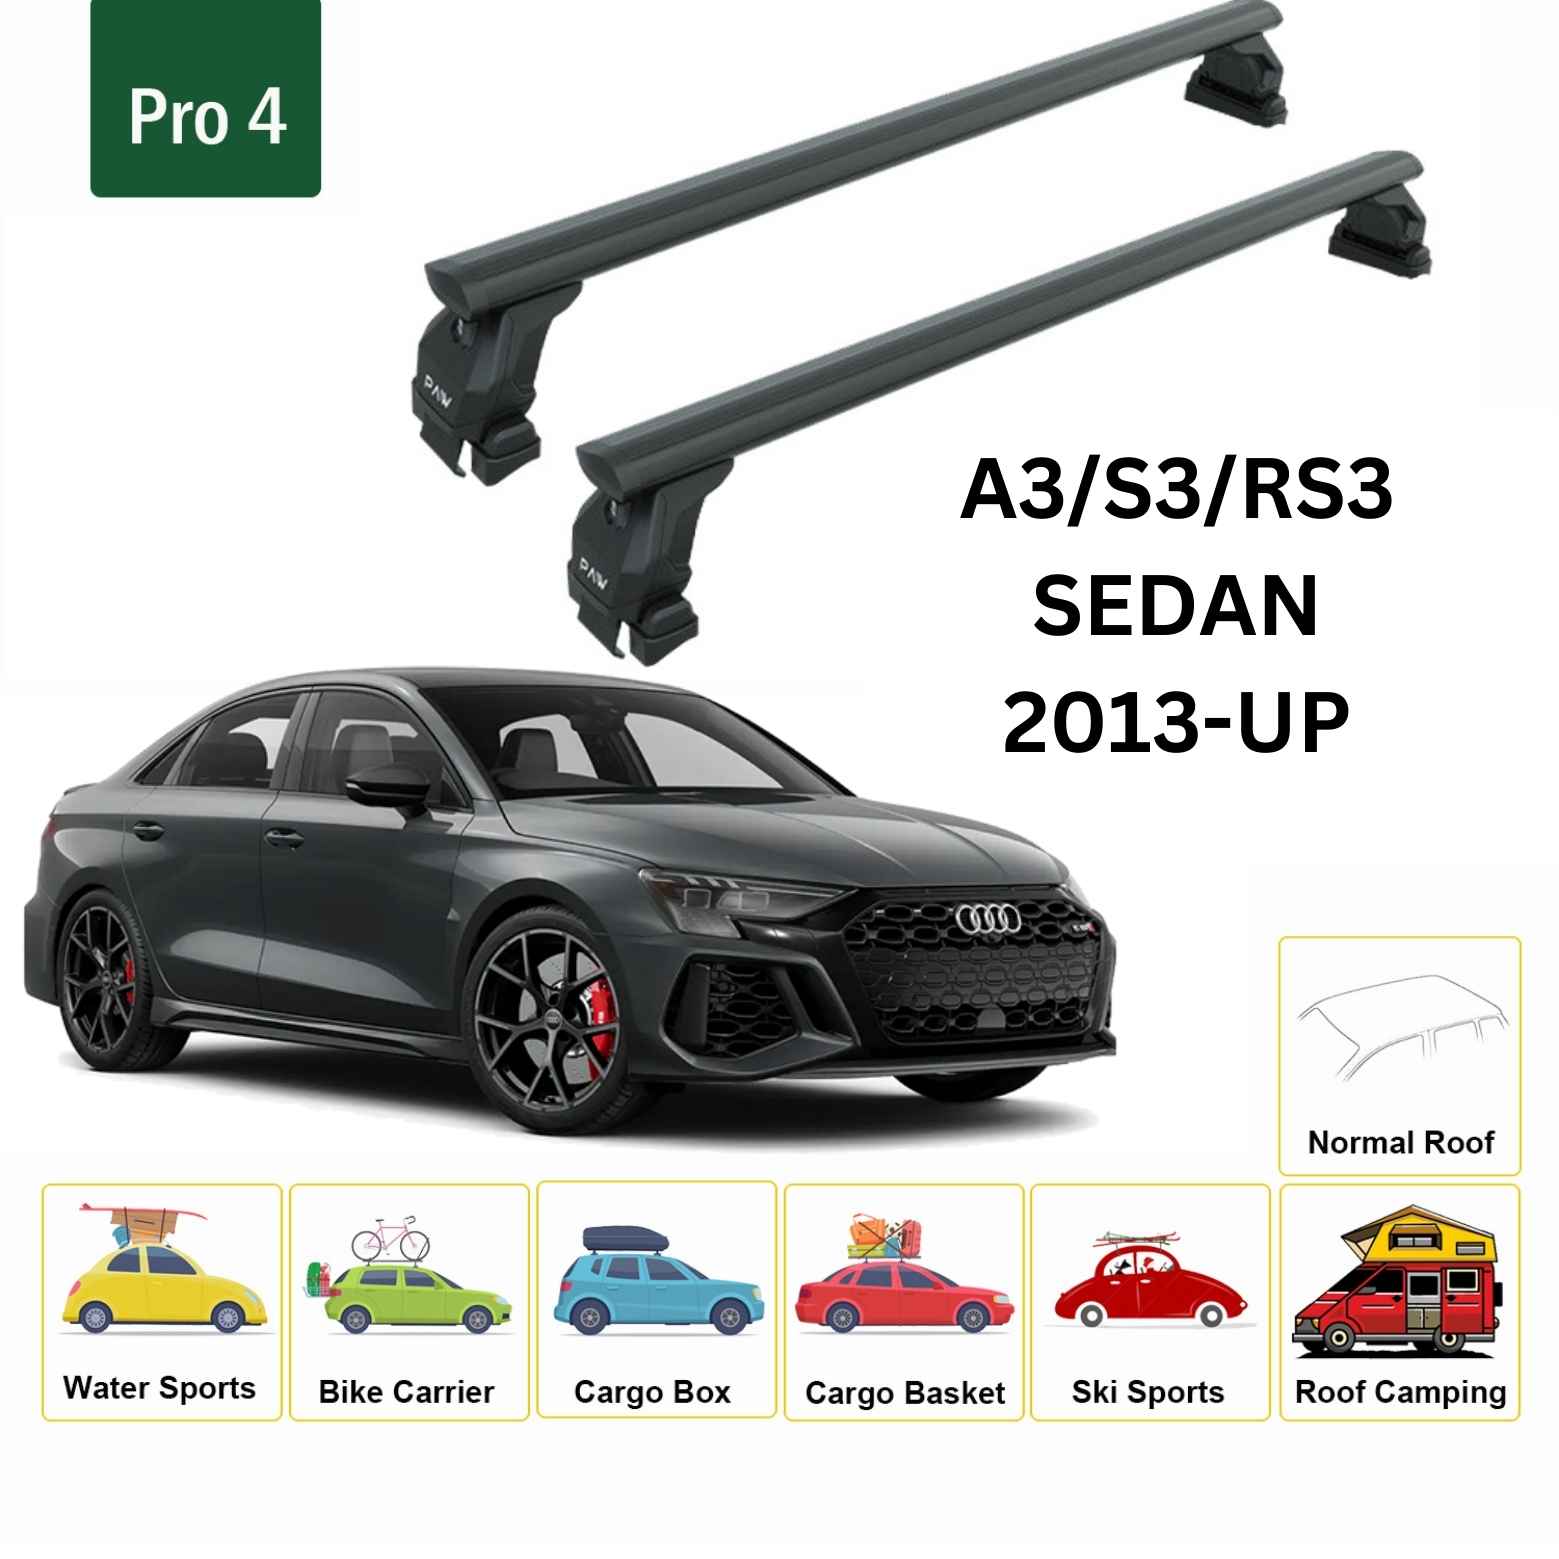 For Audi A3 Sedan Roof Rack Cross Bars Normal Roof Alu Black 2013-Up - 0